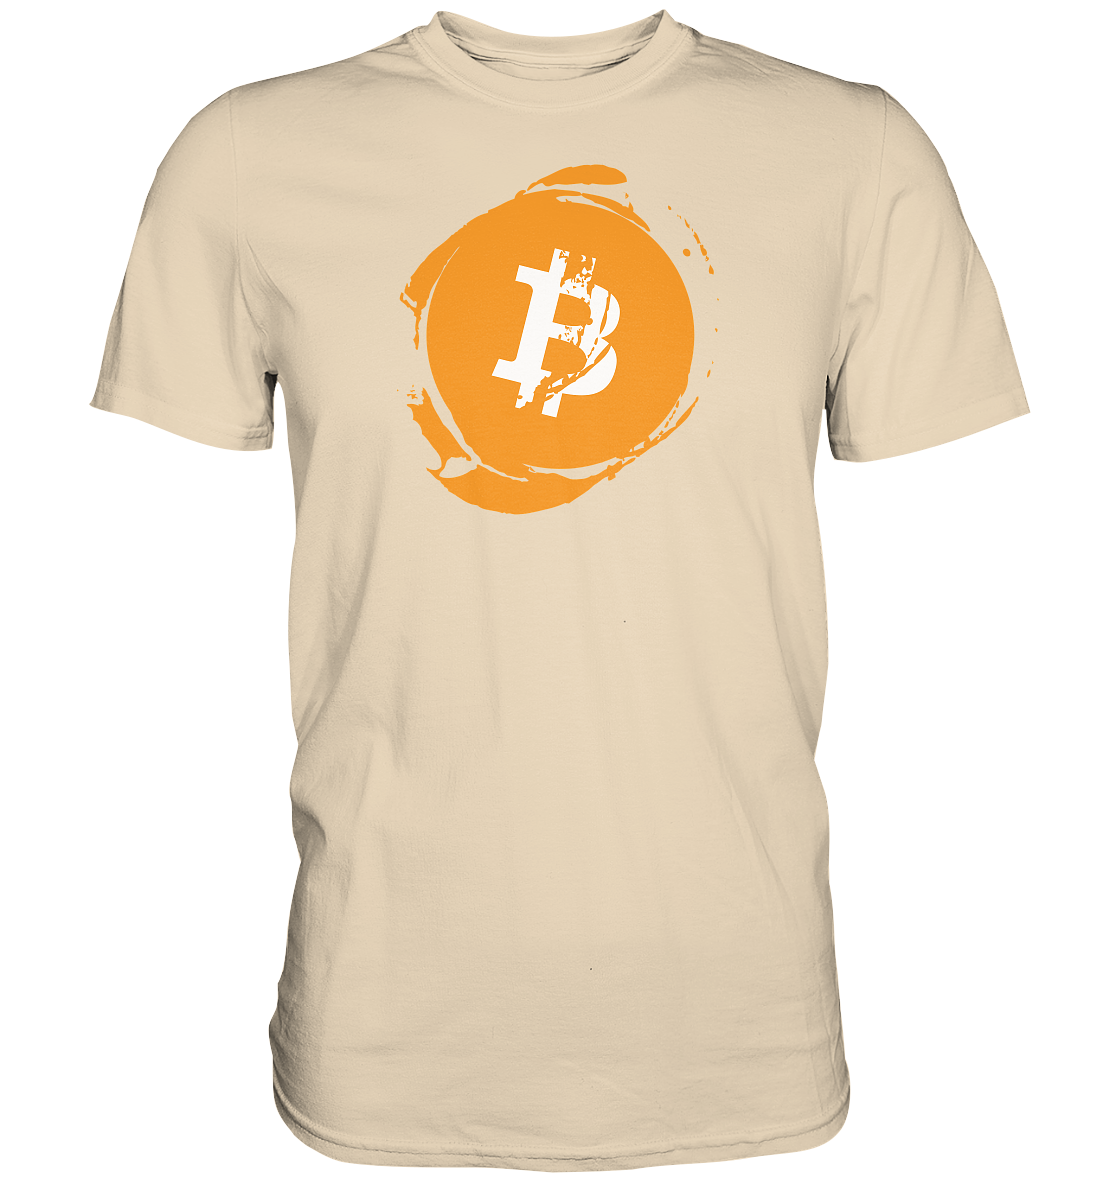 Bitcoin "Stamp"  - Premium Shirt